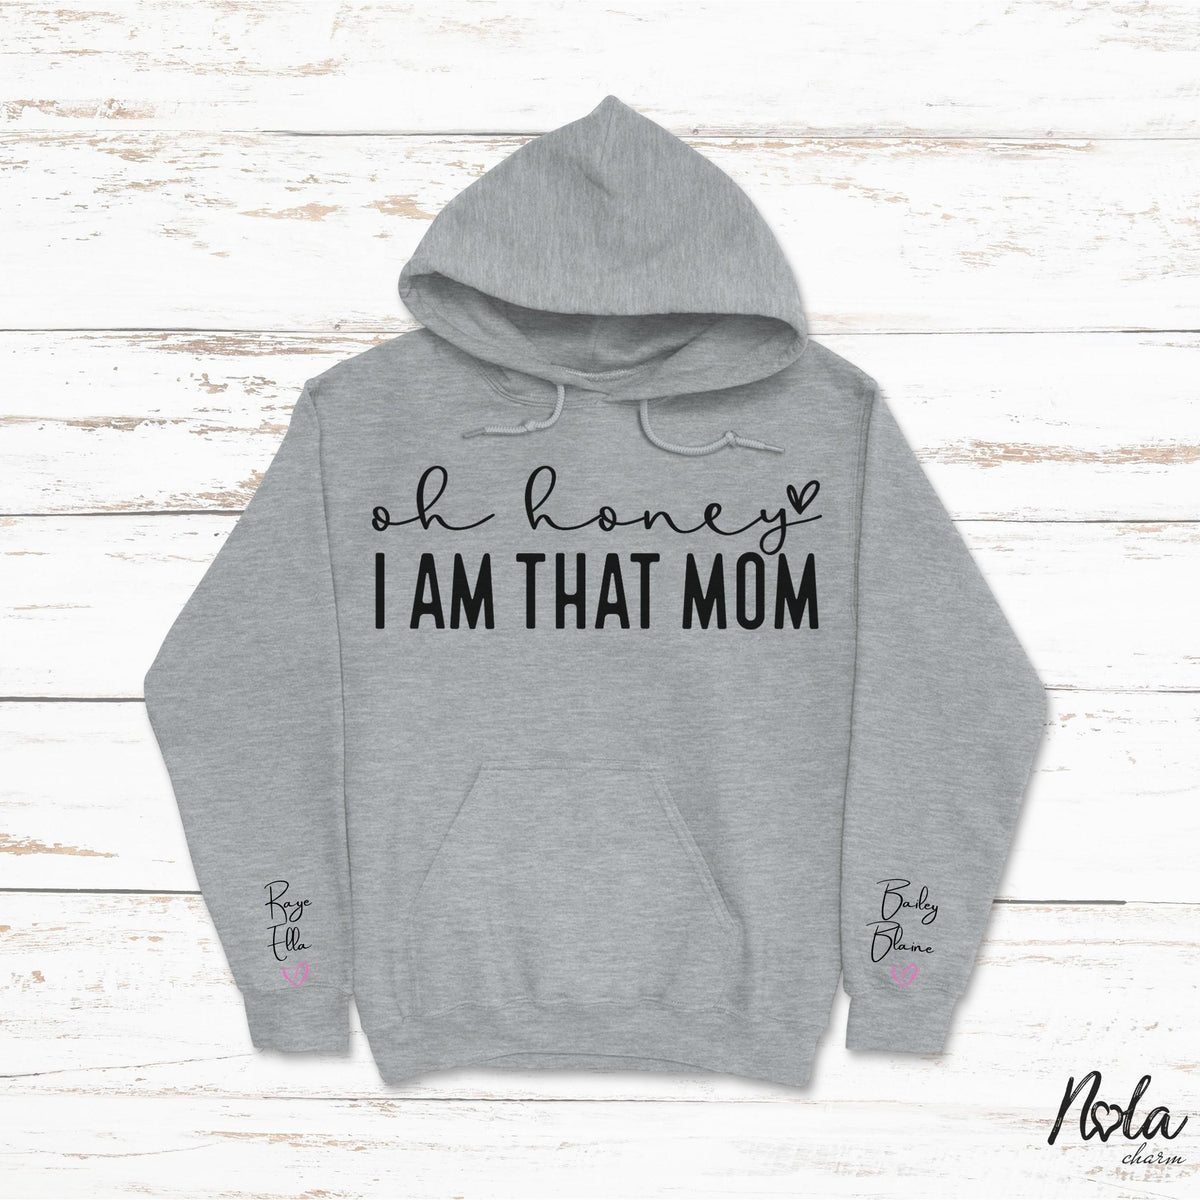 Oh Honey I Am That Mom - Custom Names on Sleeve - Nola Charm